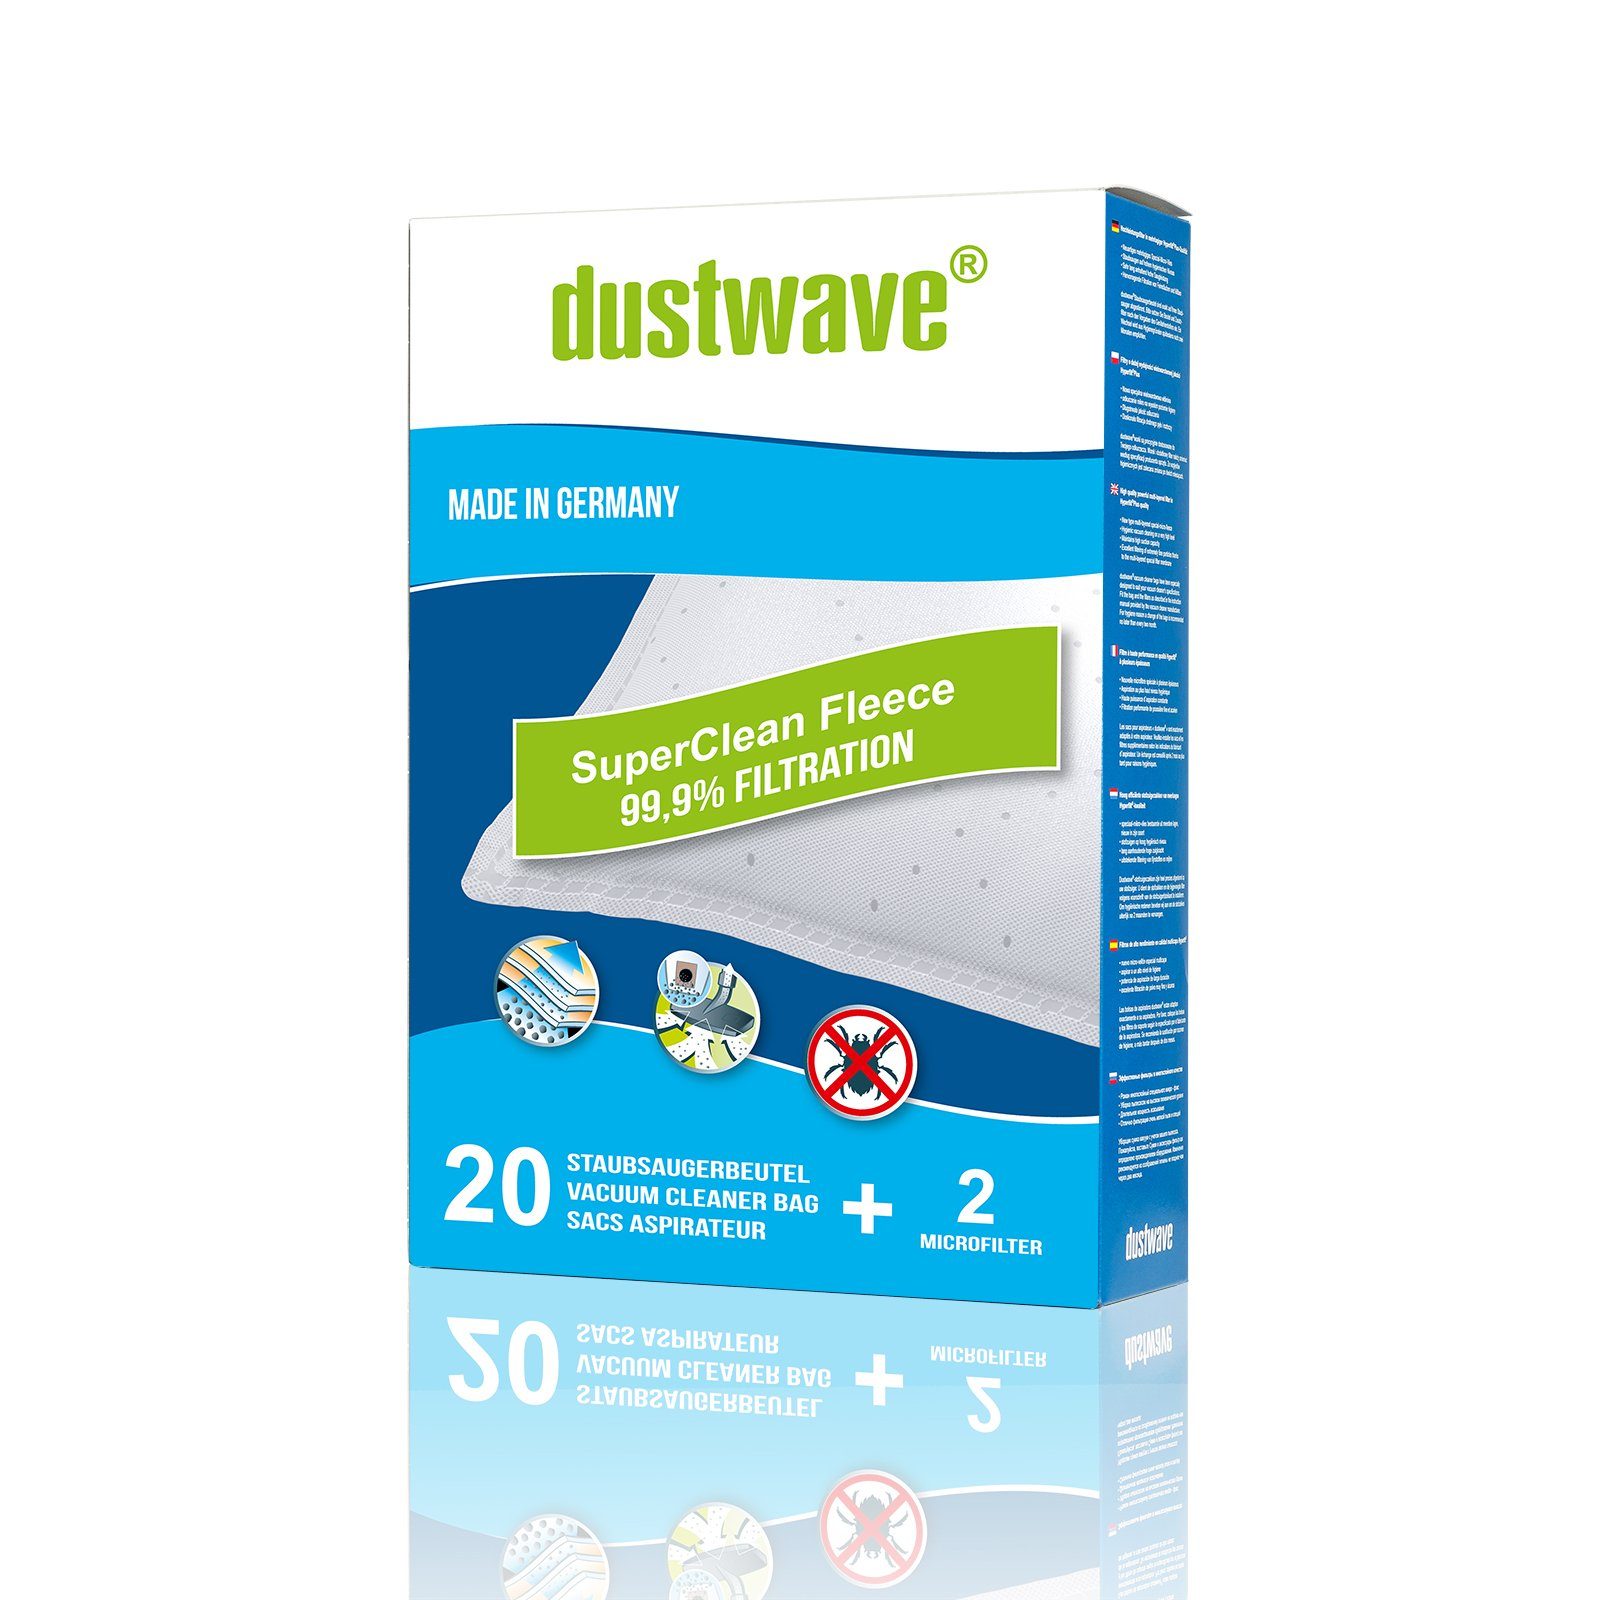 Dustwave Staubsaugerbeutel Megapack, passend für Bliss BS 1400 / BS1400, 20 St., Megapack, 20 Staubsaugerbeutel + 2 Hepa-Filter (ca. 15x15cm - zuschneidbar)